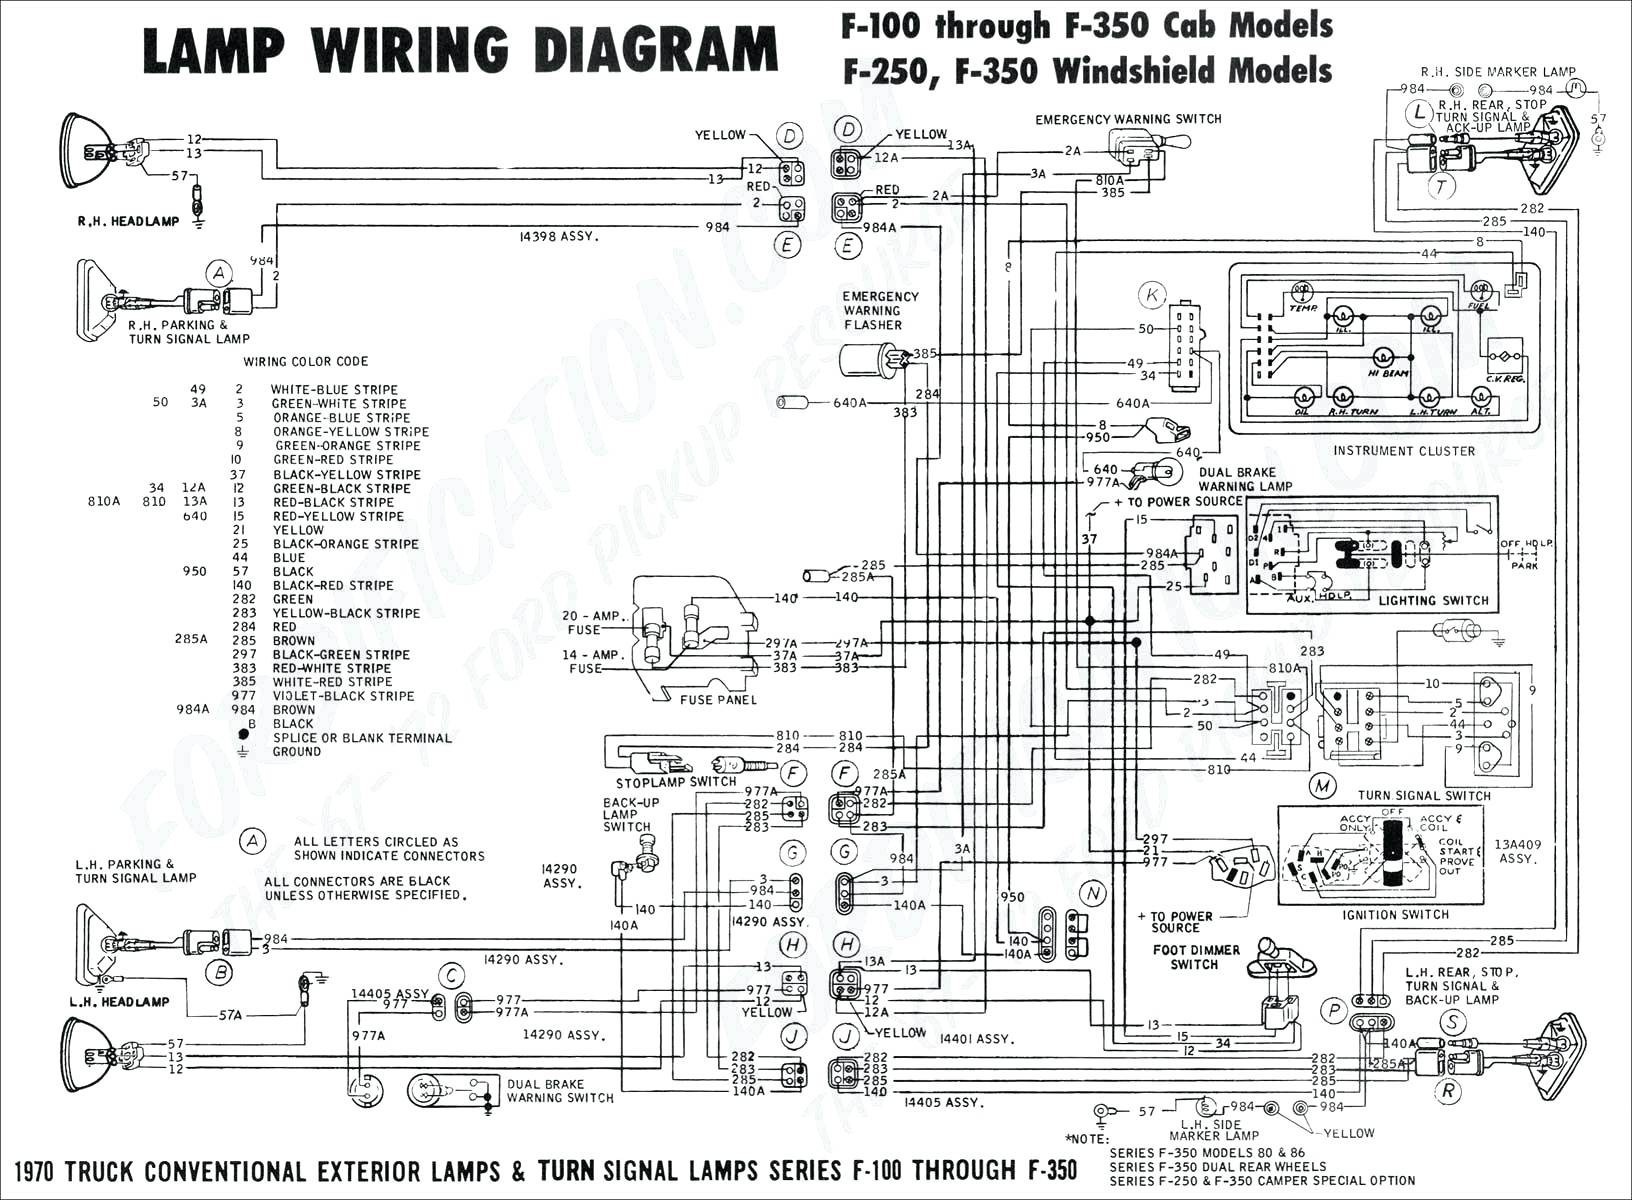 Western Plow Wiring Diagram Best Wiring Diagram 17 Western Plow Light Wiring Diagram Image